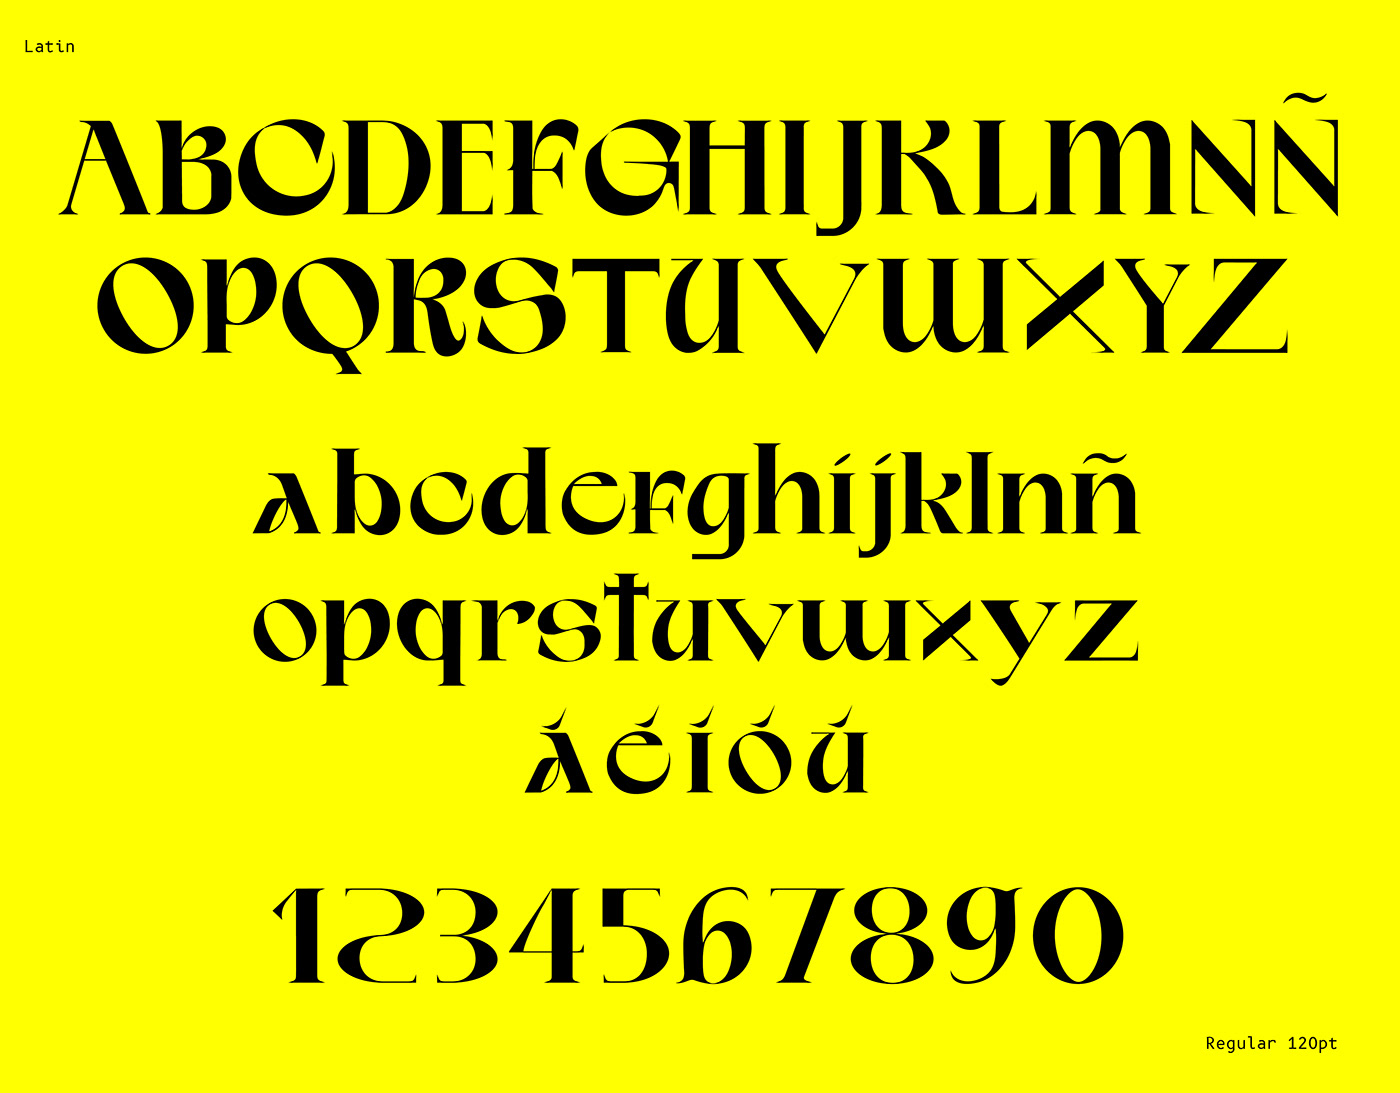 gabo gratis tipografia Typeface Cyrillic font cyrillic font free Free font fuente gratis gabriel garcia marquez tipografía gratis